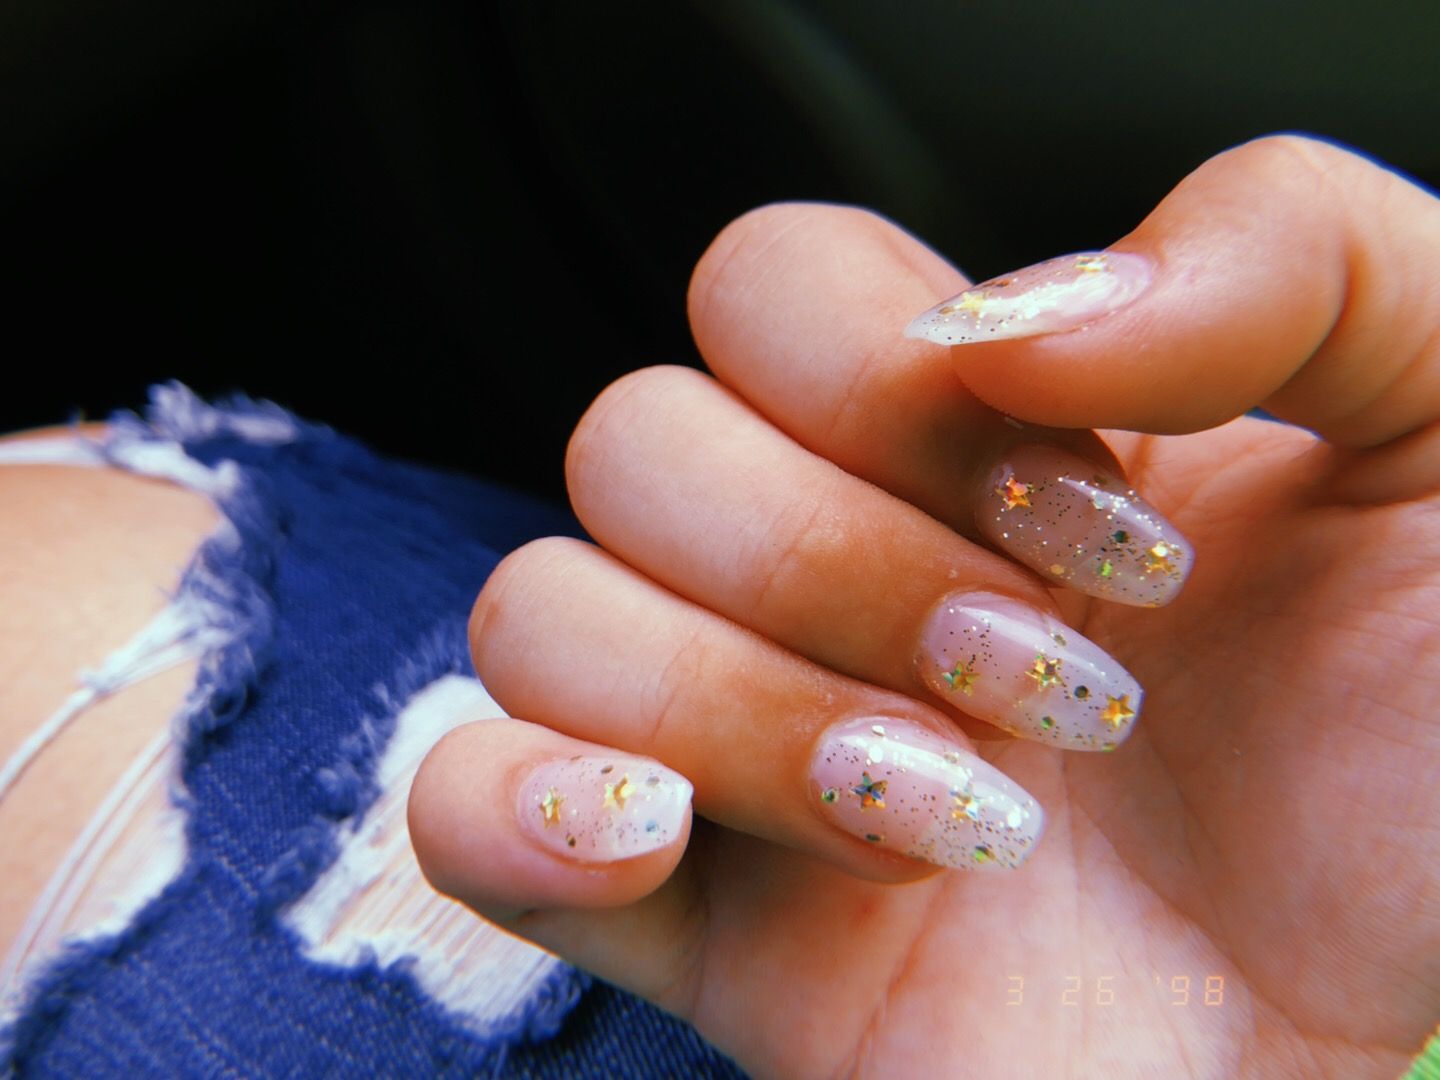 Gold Star Manicure